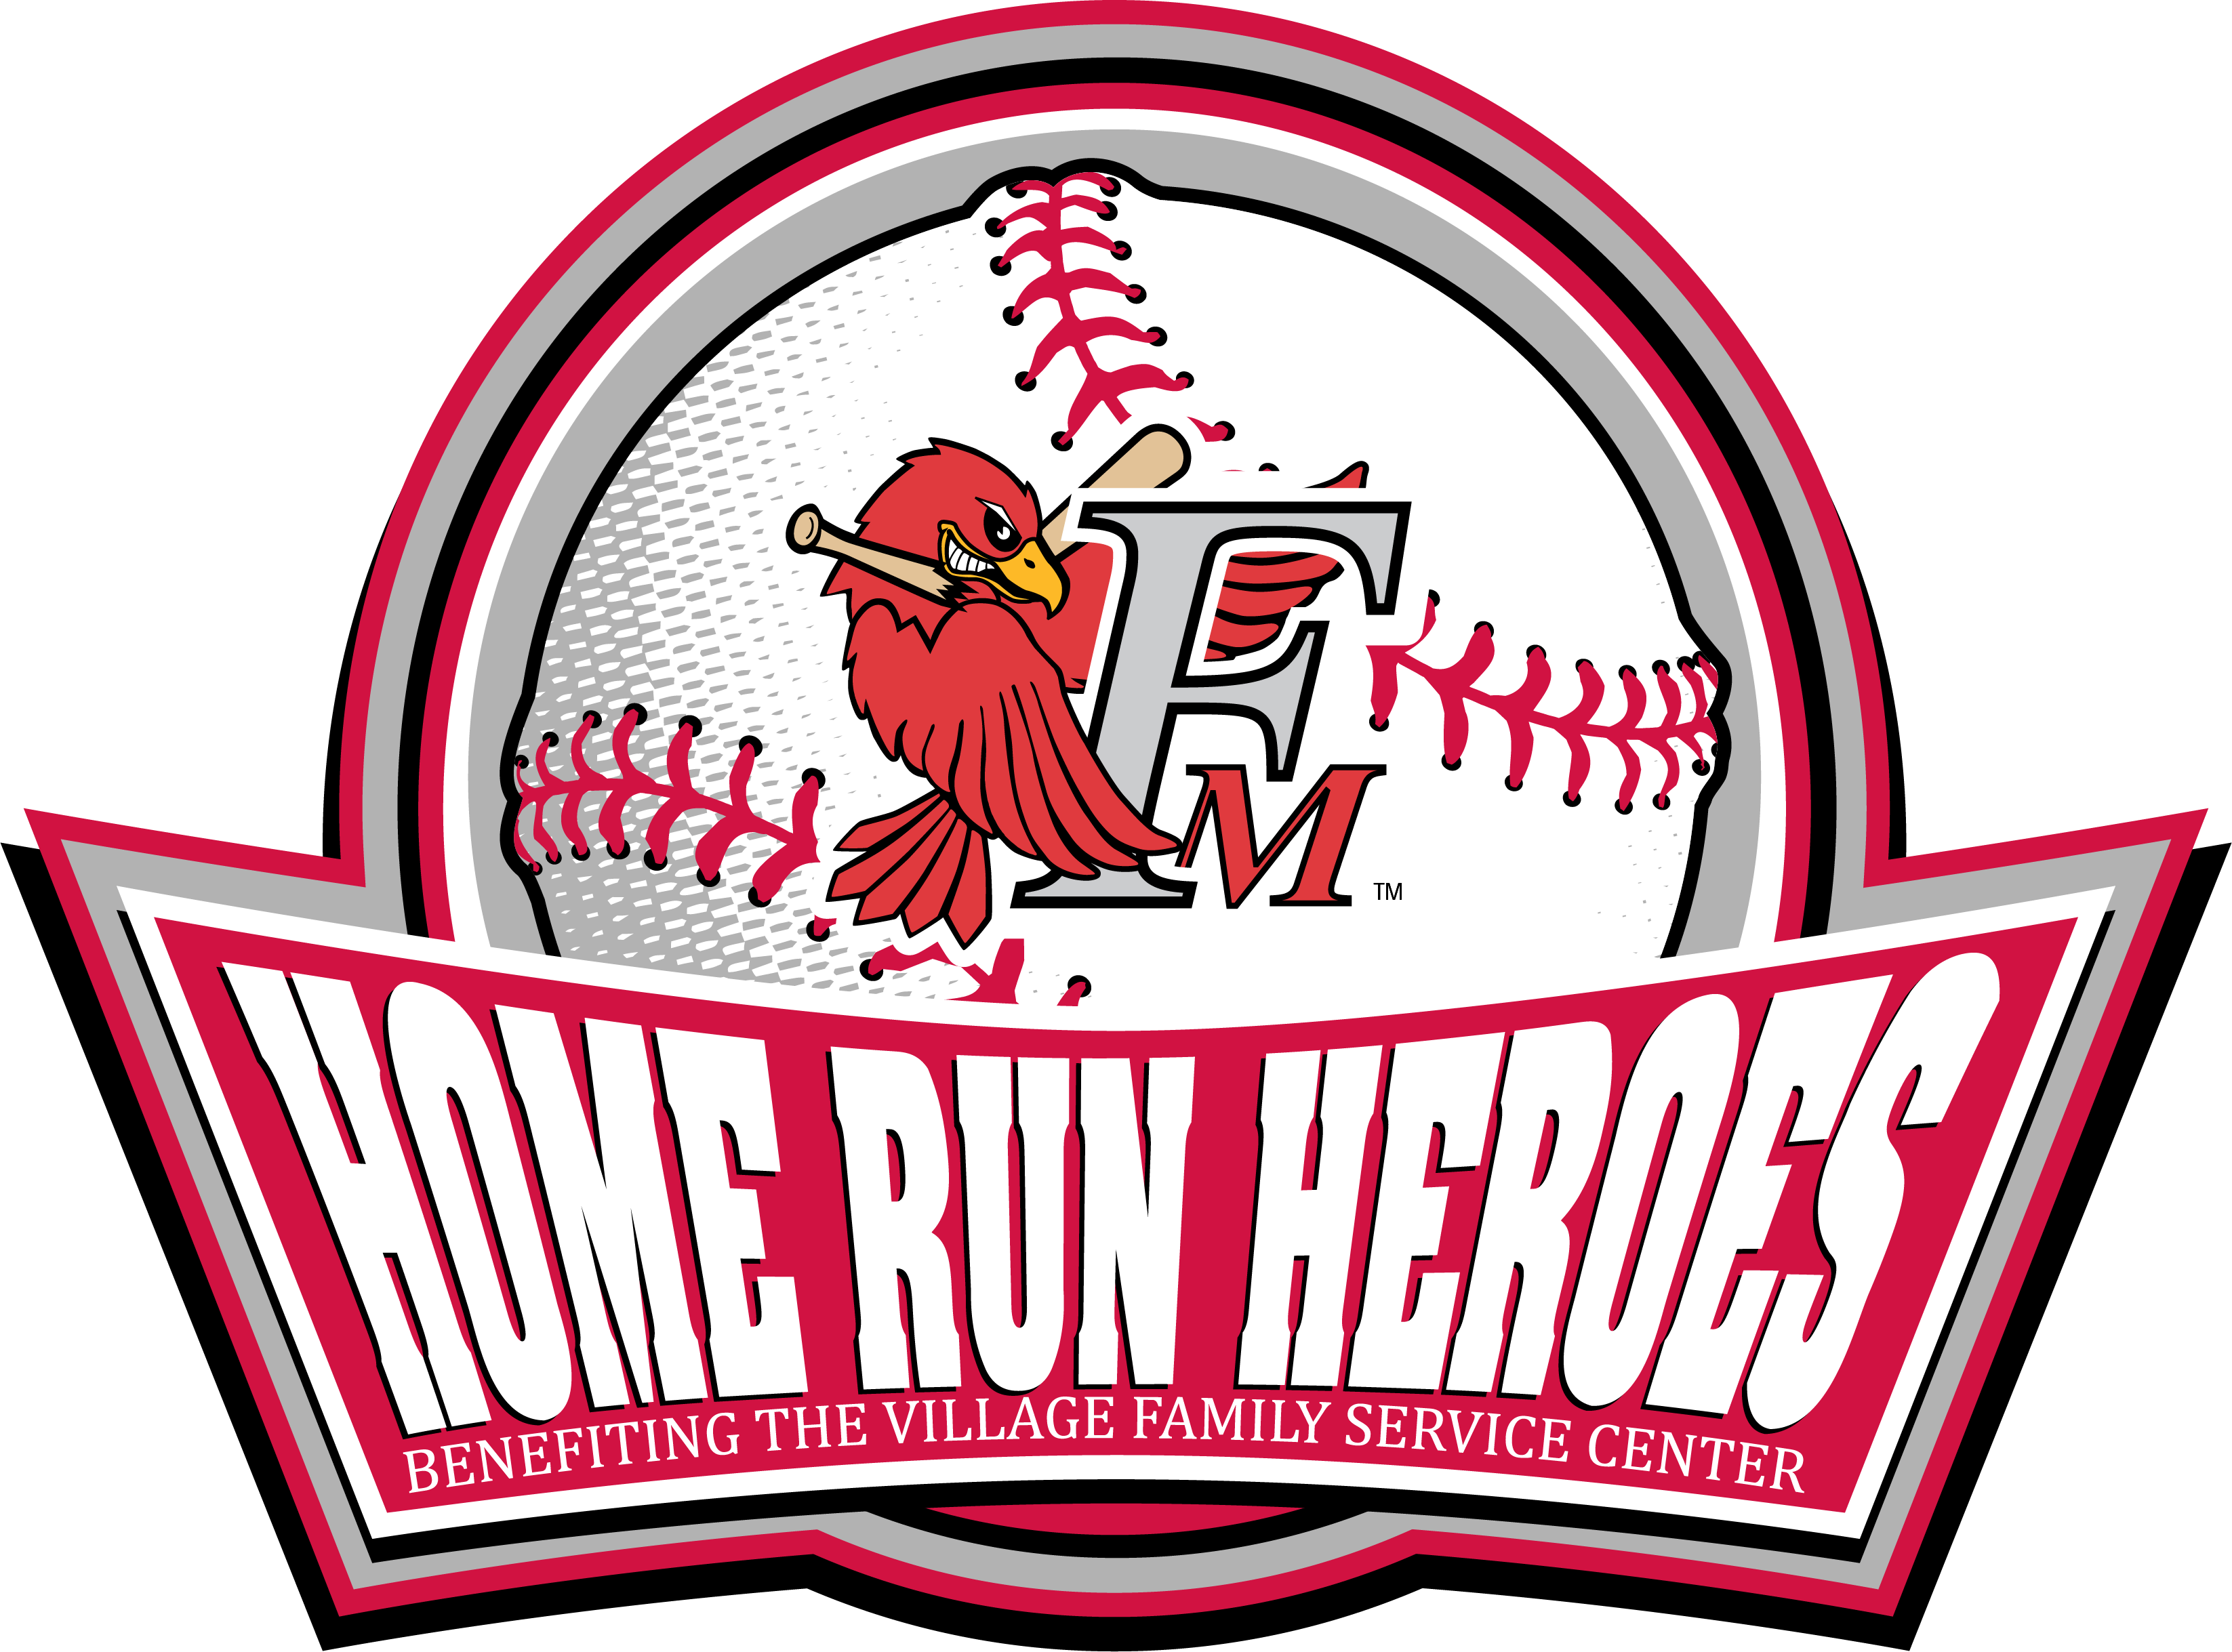 Home Run Heroes